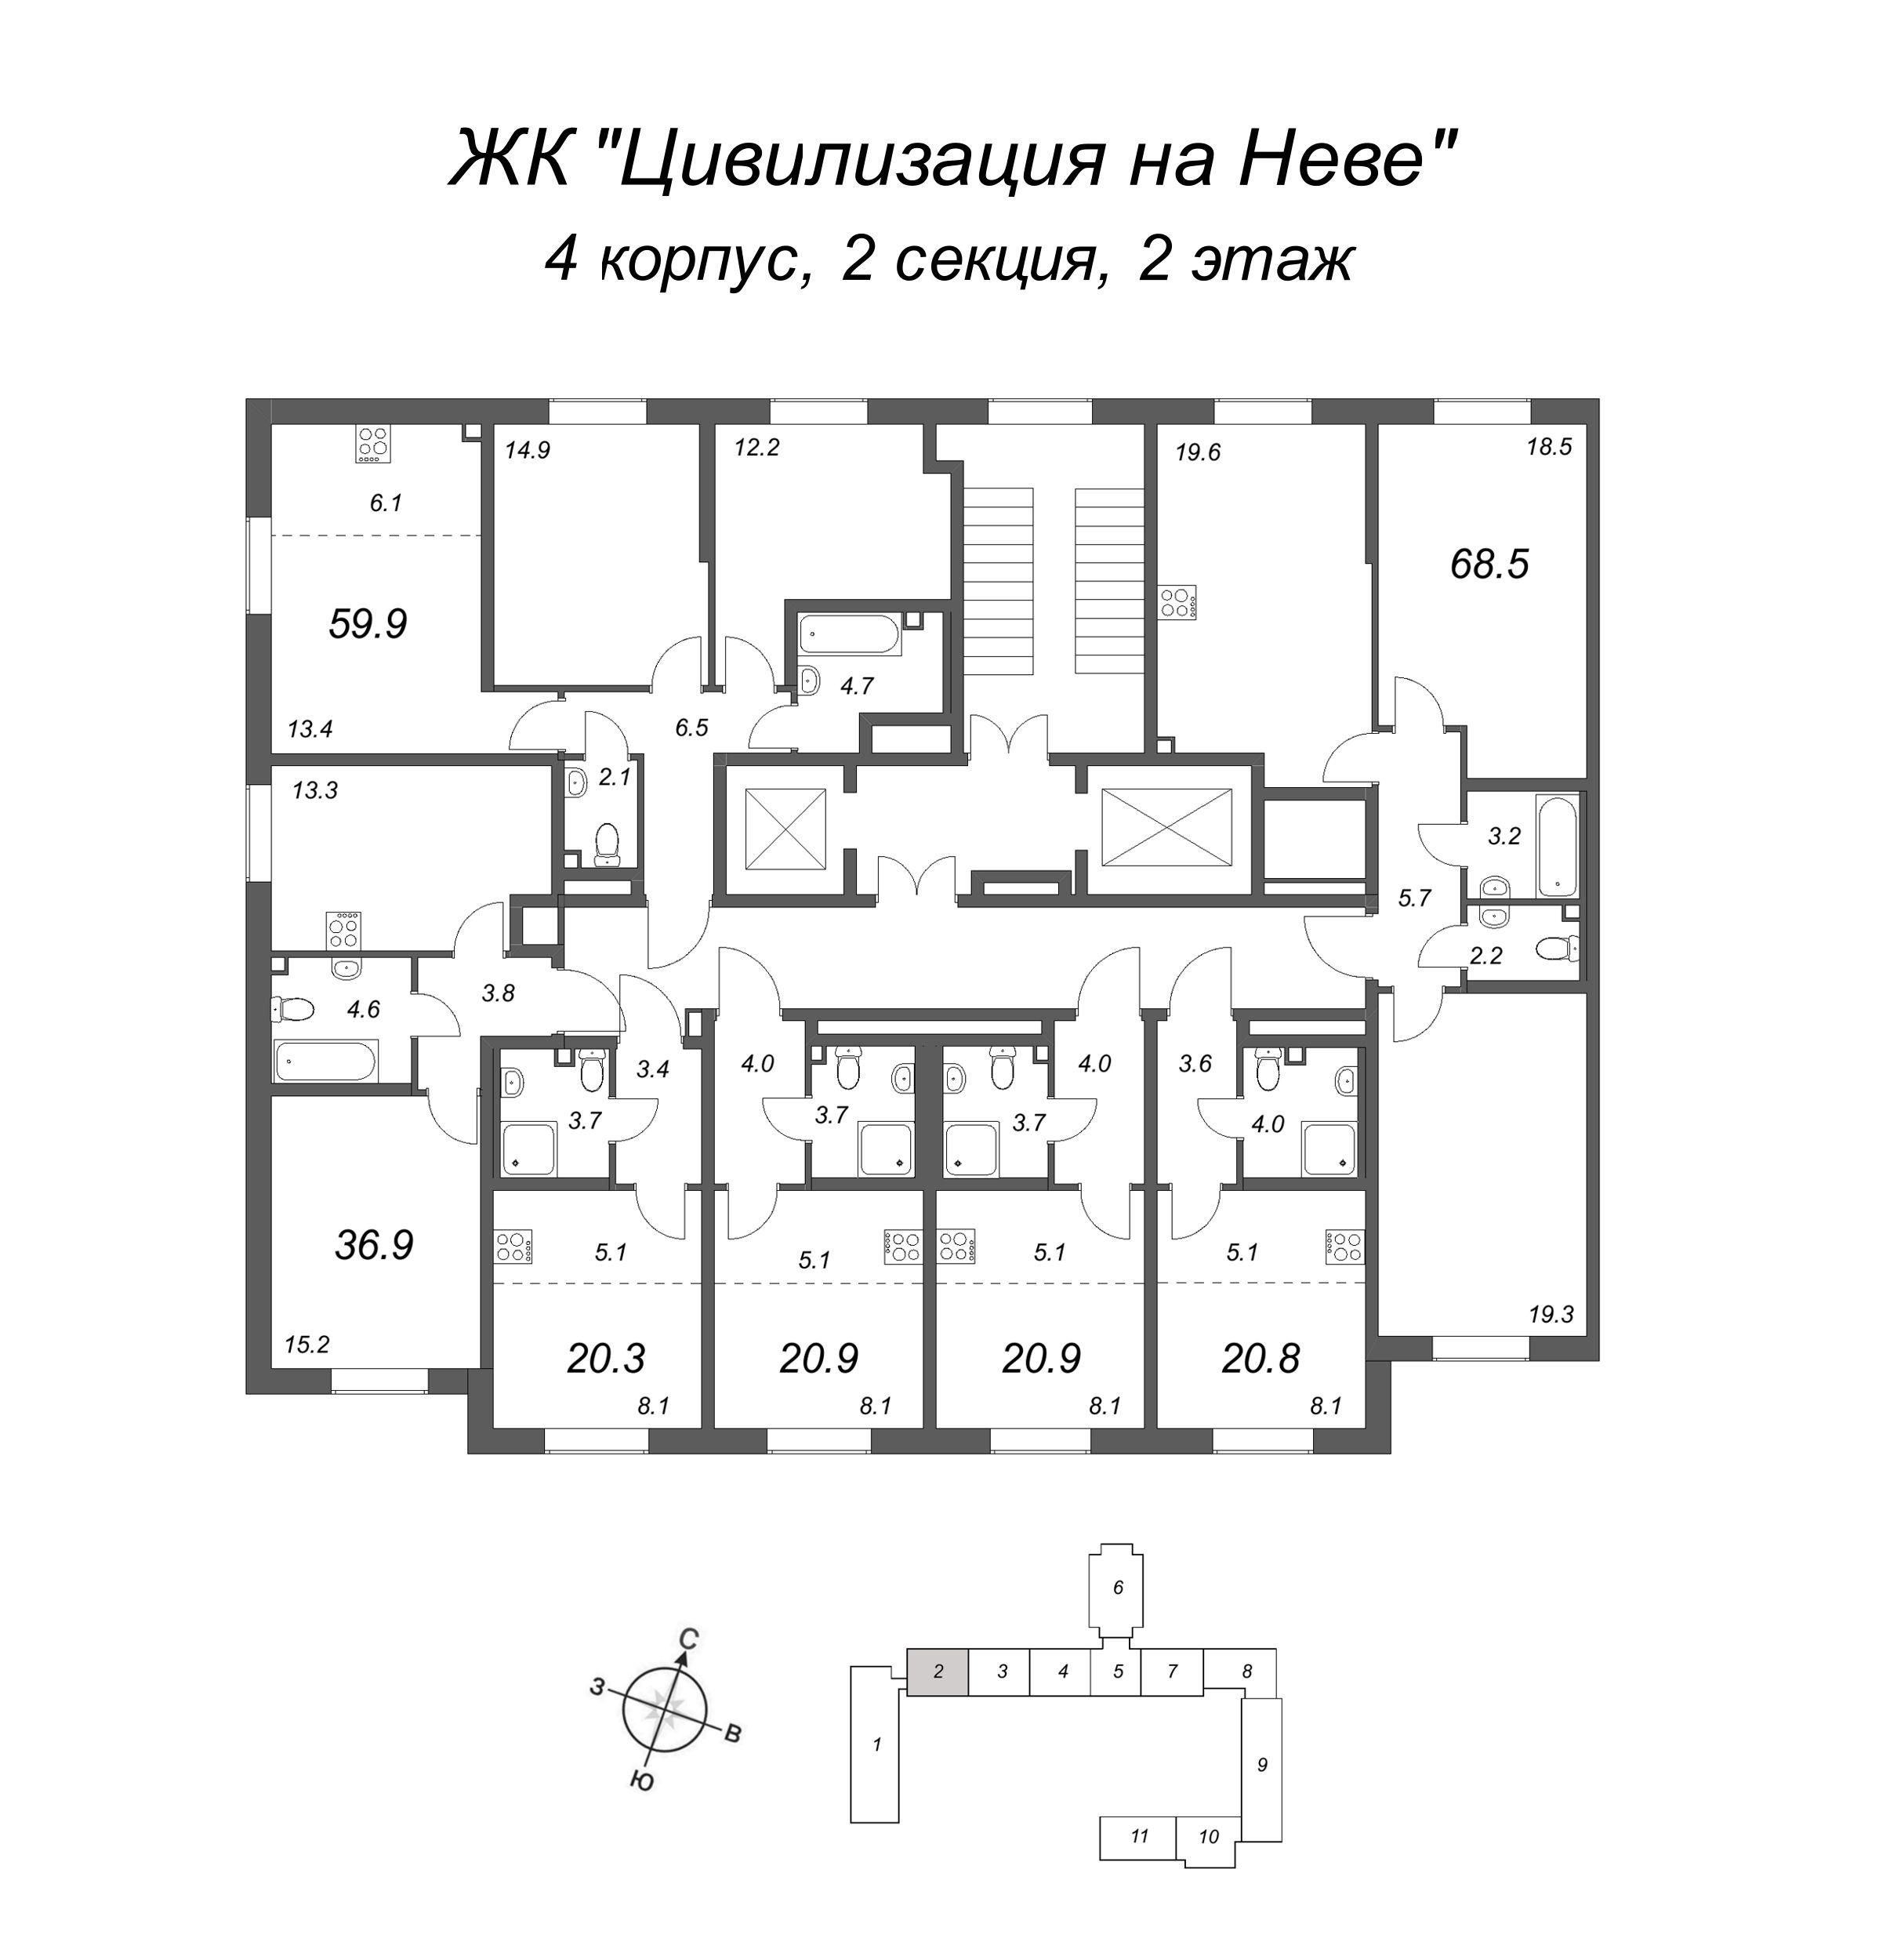 3-комнатная (Евро) квартира, 68.5 м² - планировка этажа